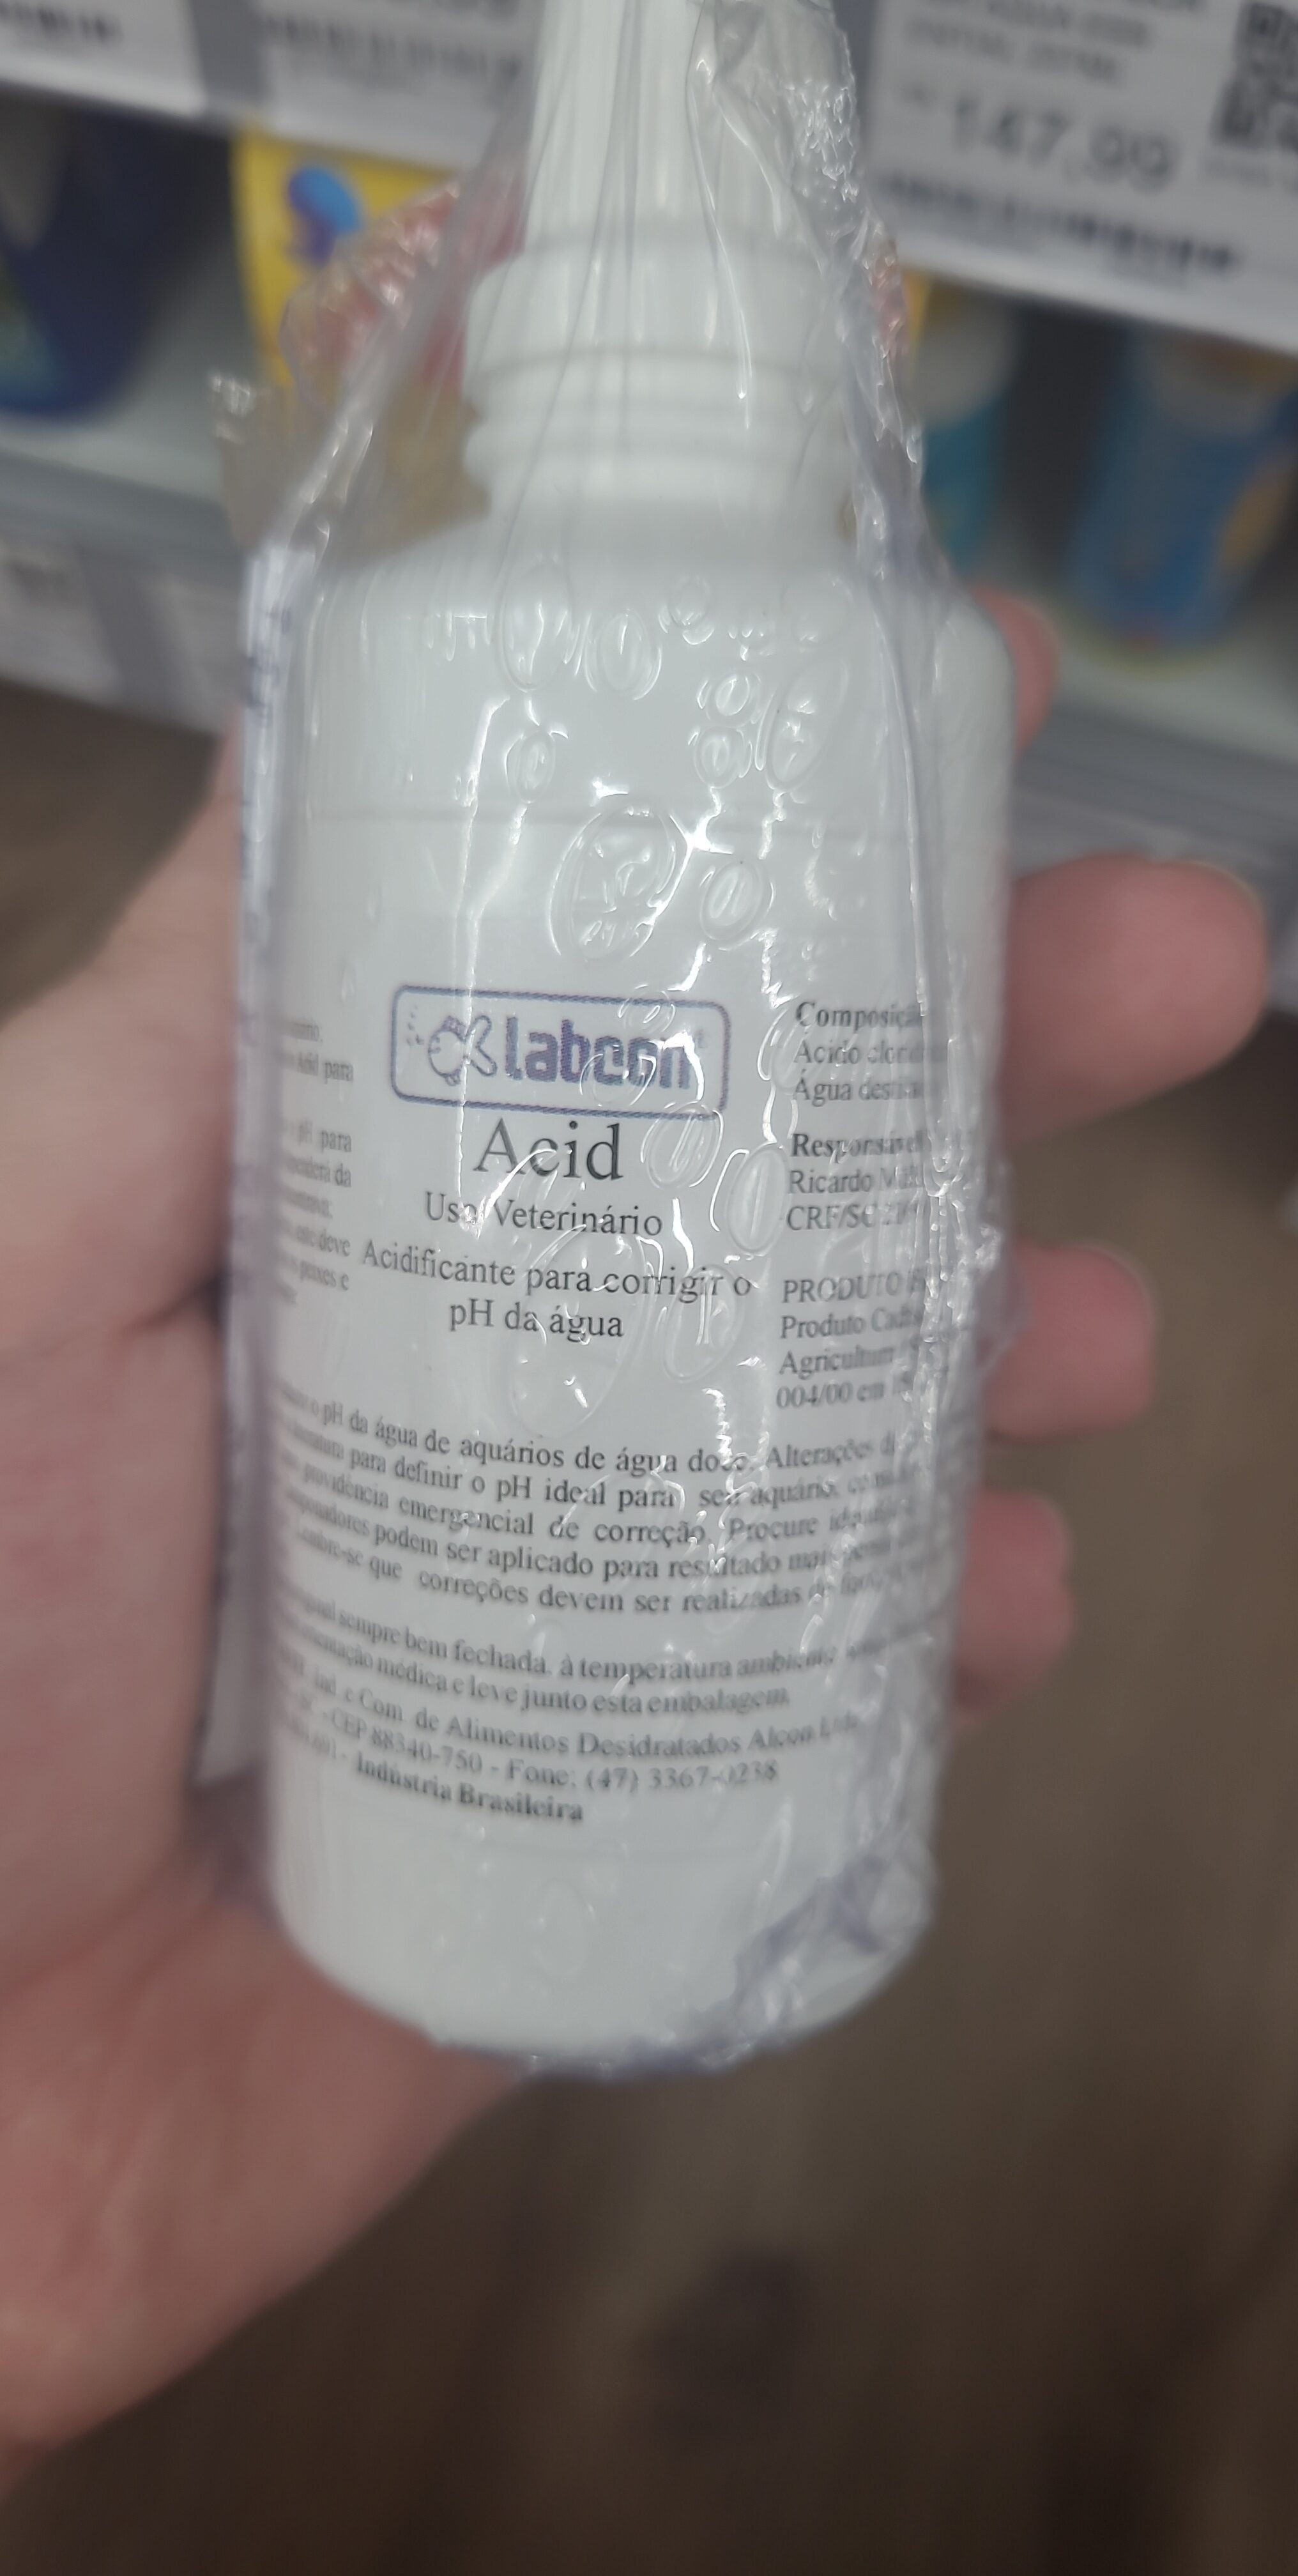 Labcon acid 100ml - Product - pt